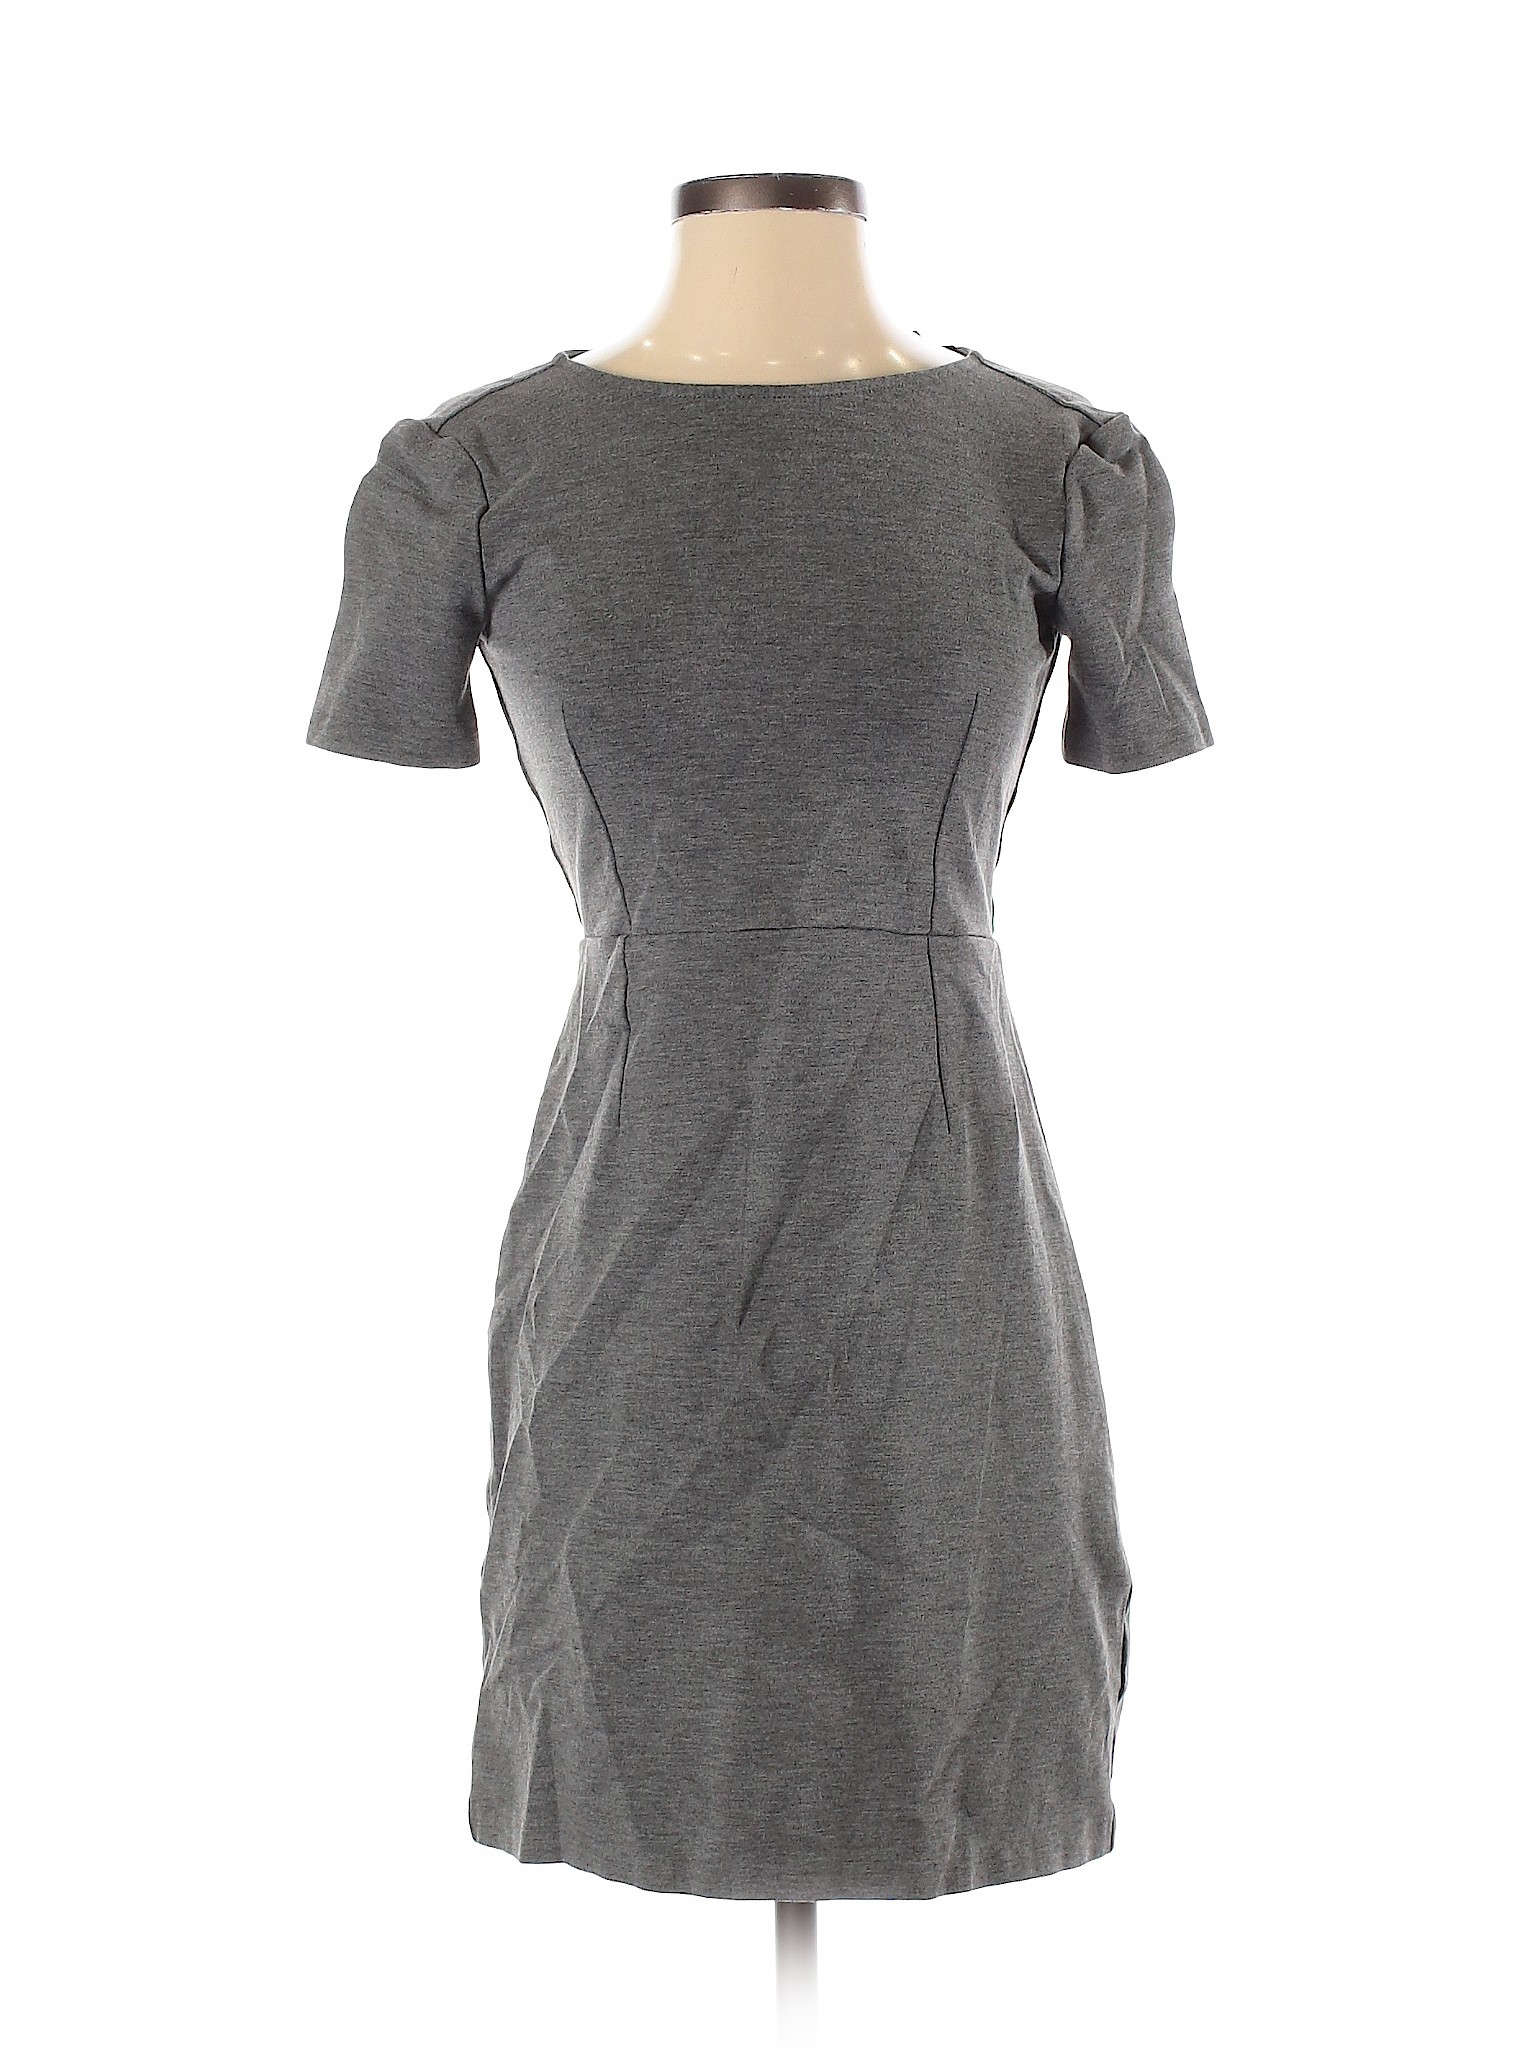 J.Crew Women Gray Casual Dress 00 | eBay